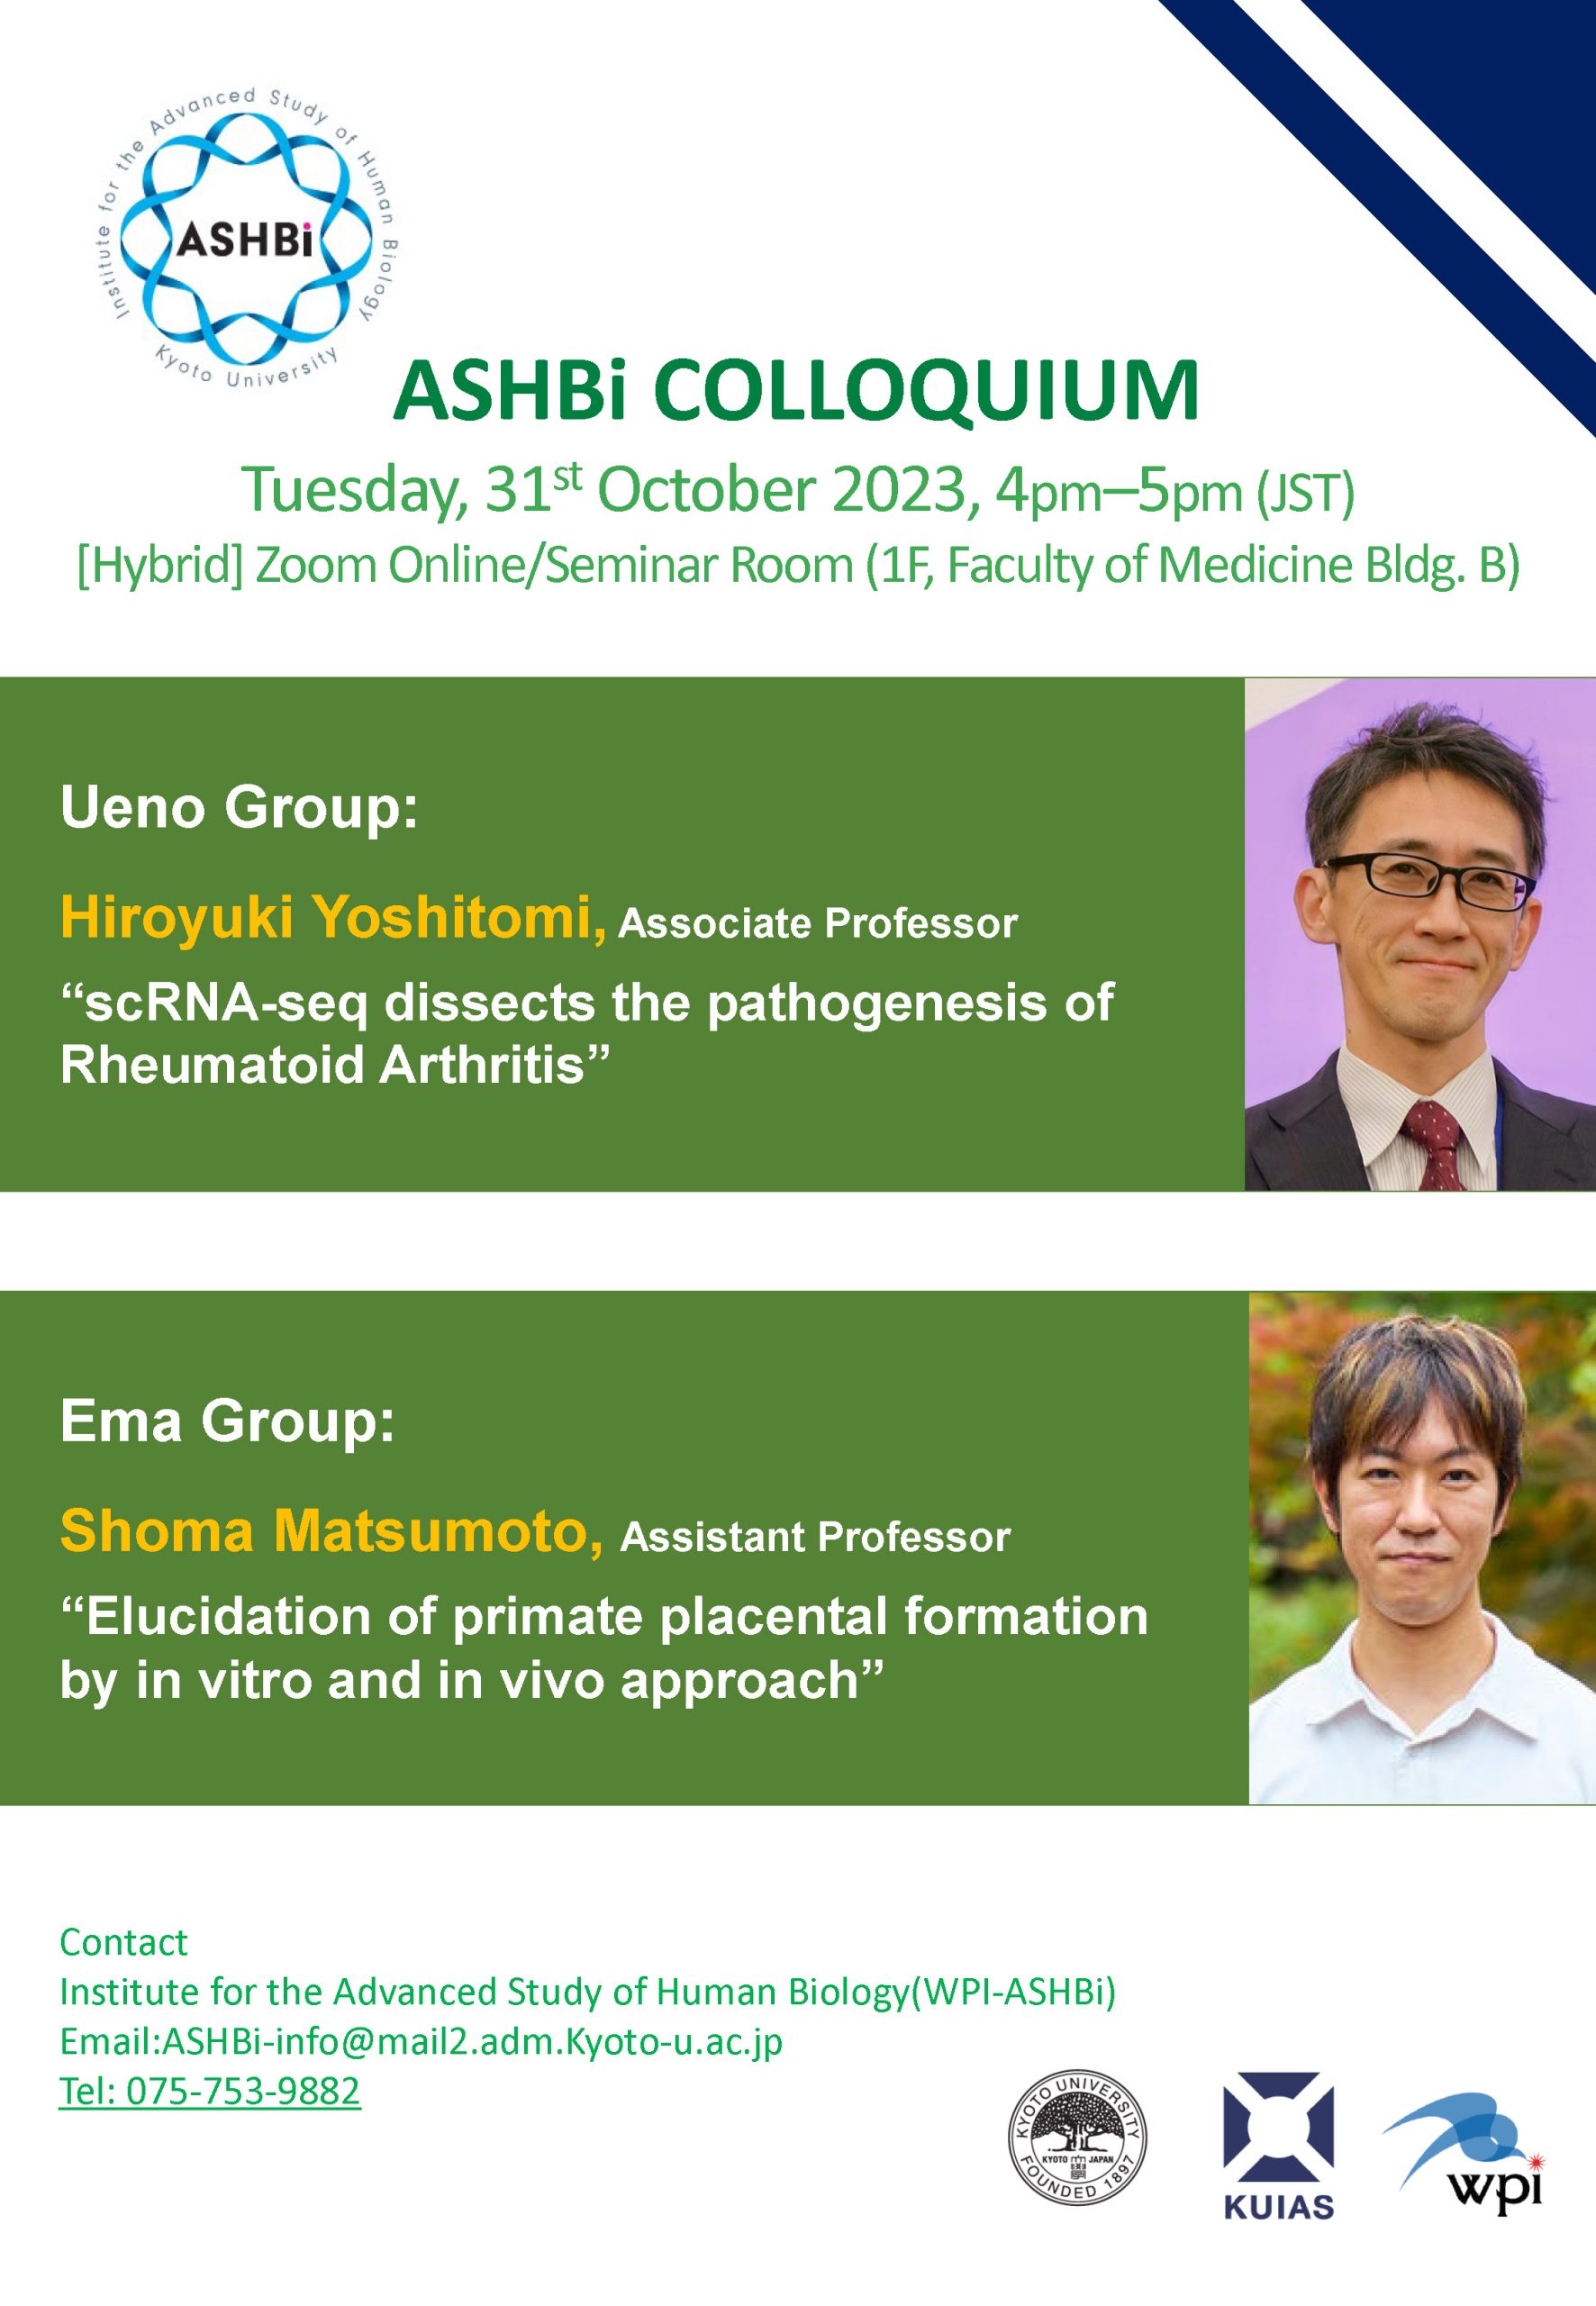 38th ASHBi Colloquium (Ueno Group & Ema Group)